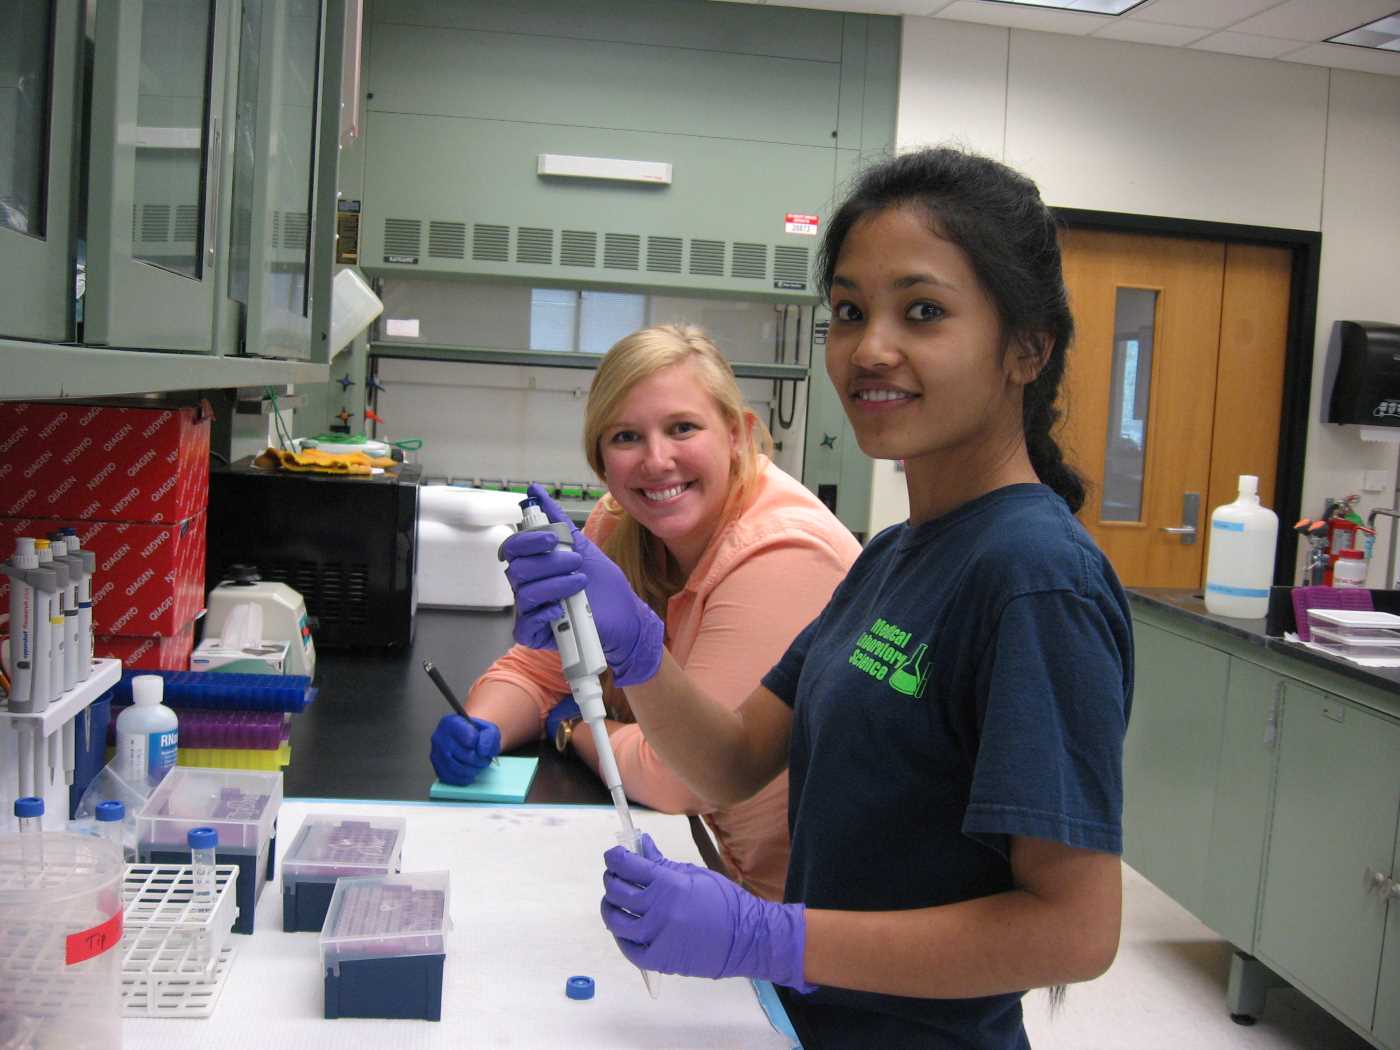 Anupa and Karen Jr. working on molecular biology